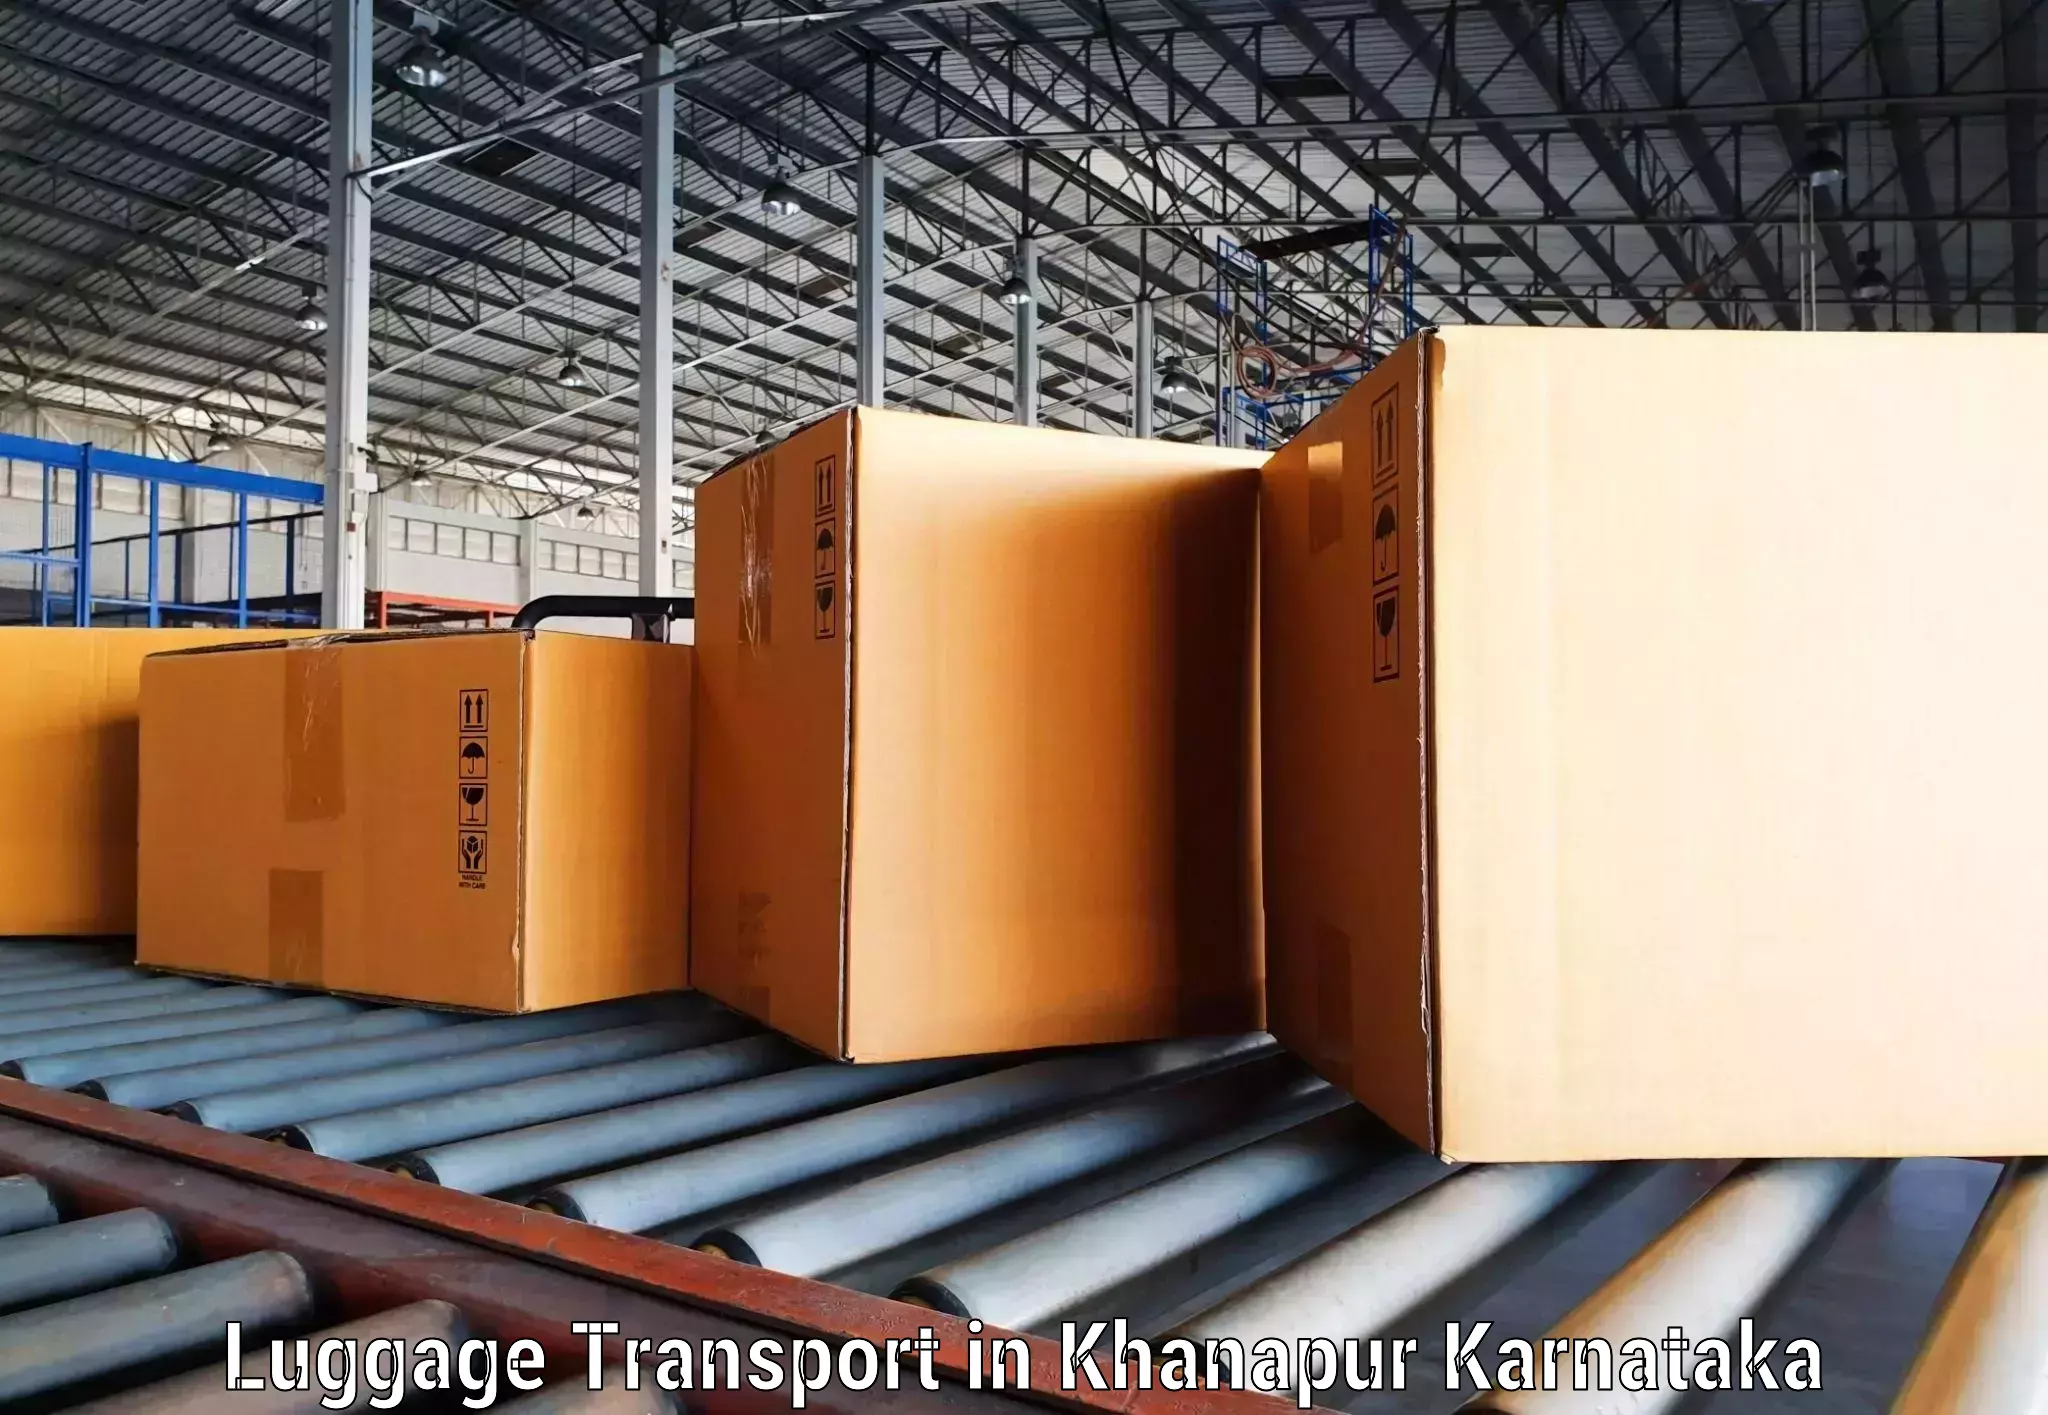 Luggage transport company in Khanapur Karnataka